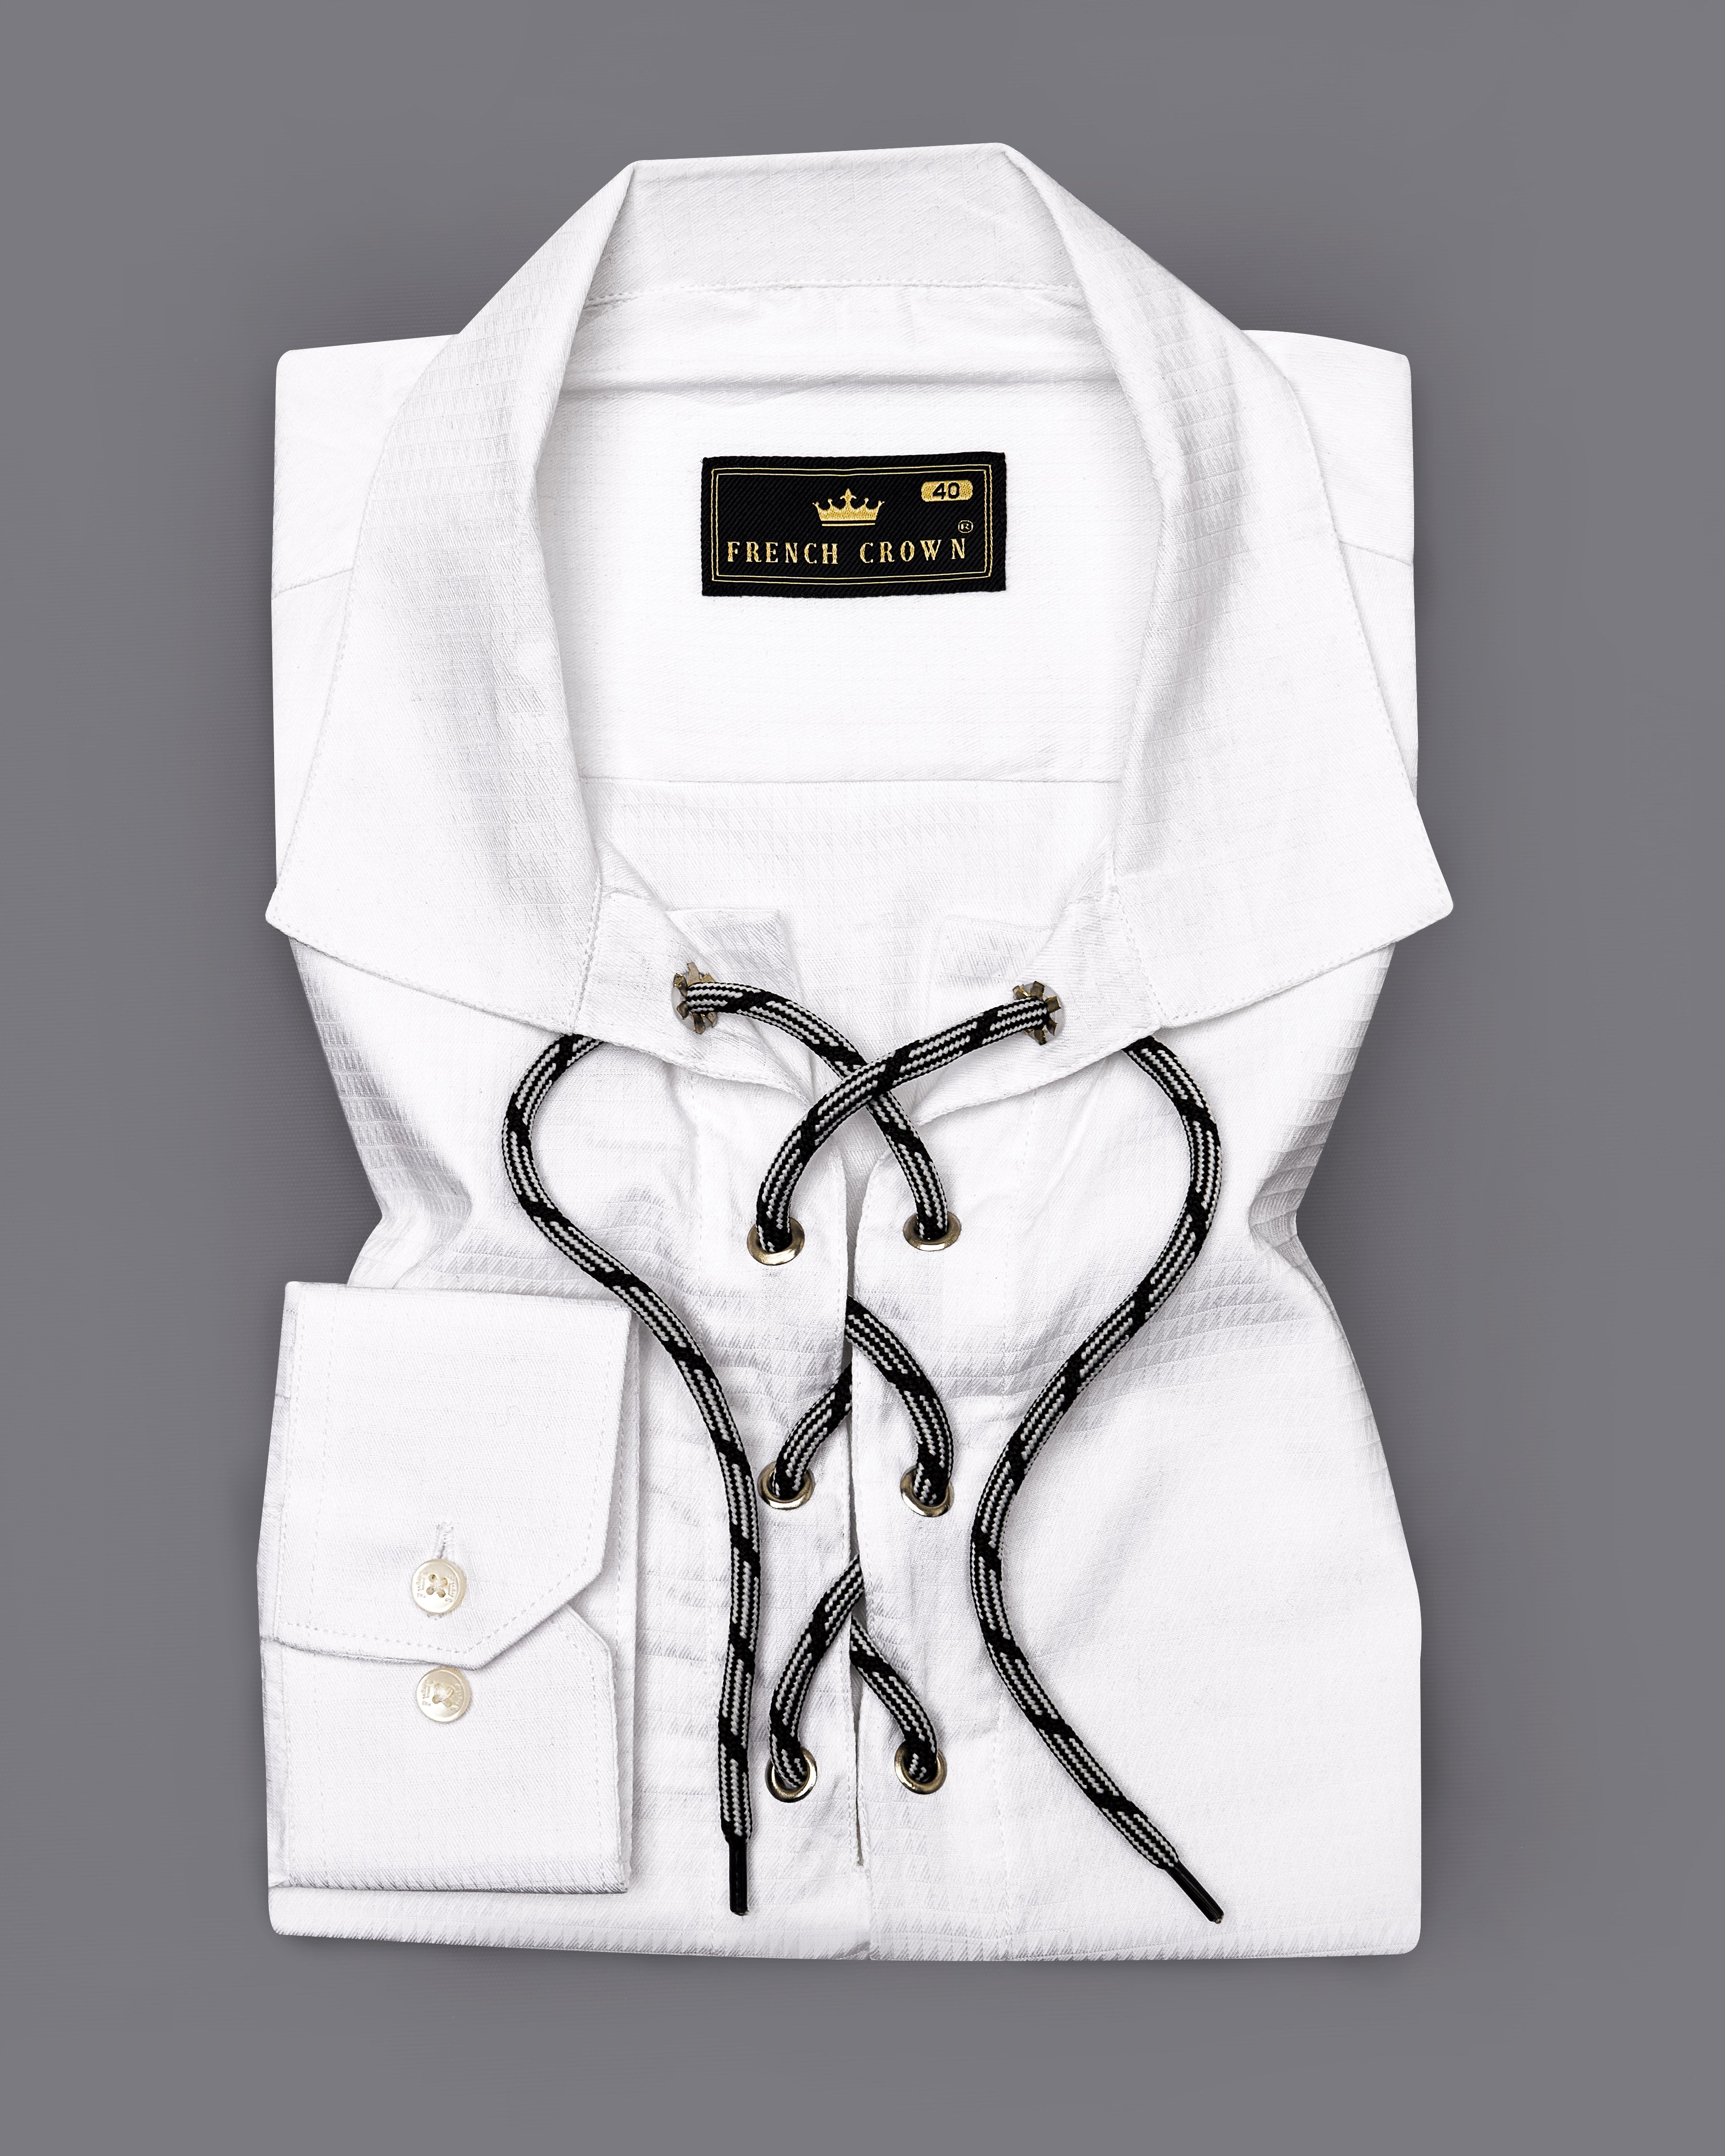 Bright White Dobby Textured Premium Giza Cotton Bohemian Inspired Designer Shirt